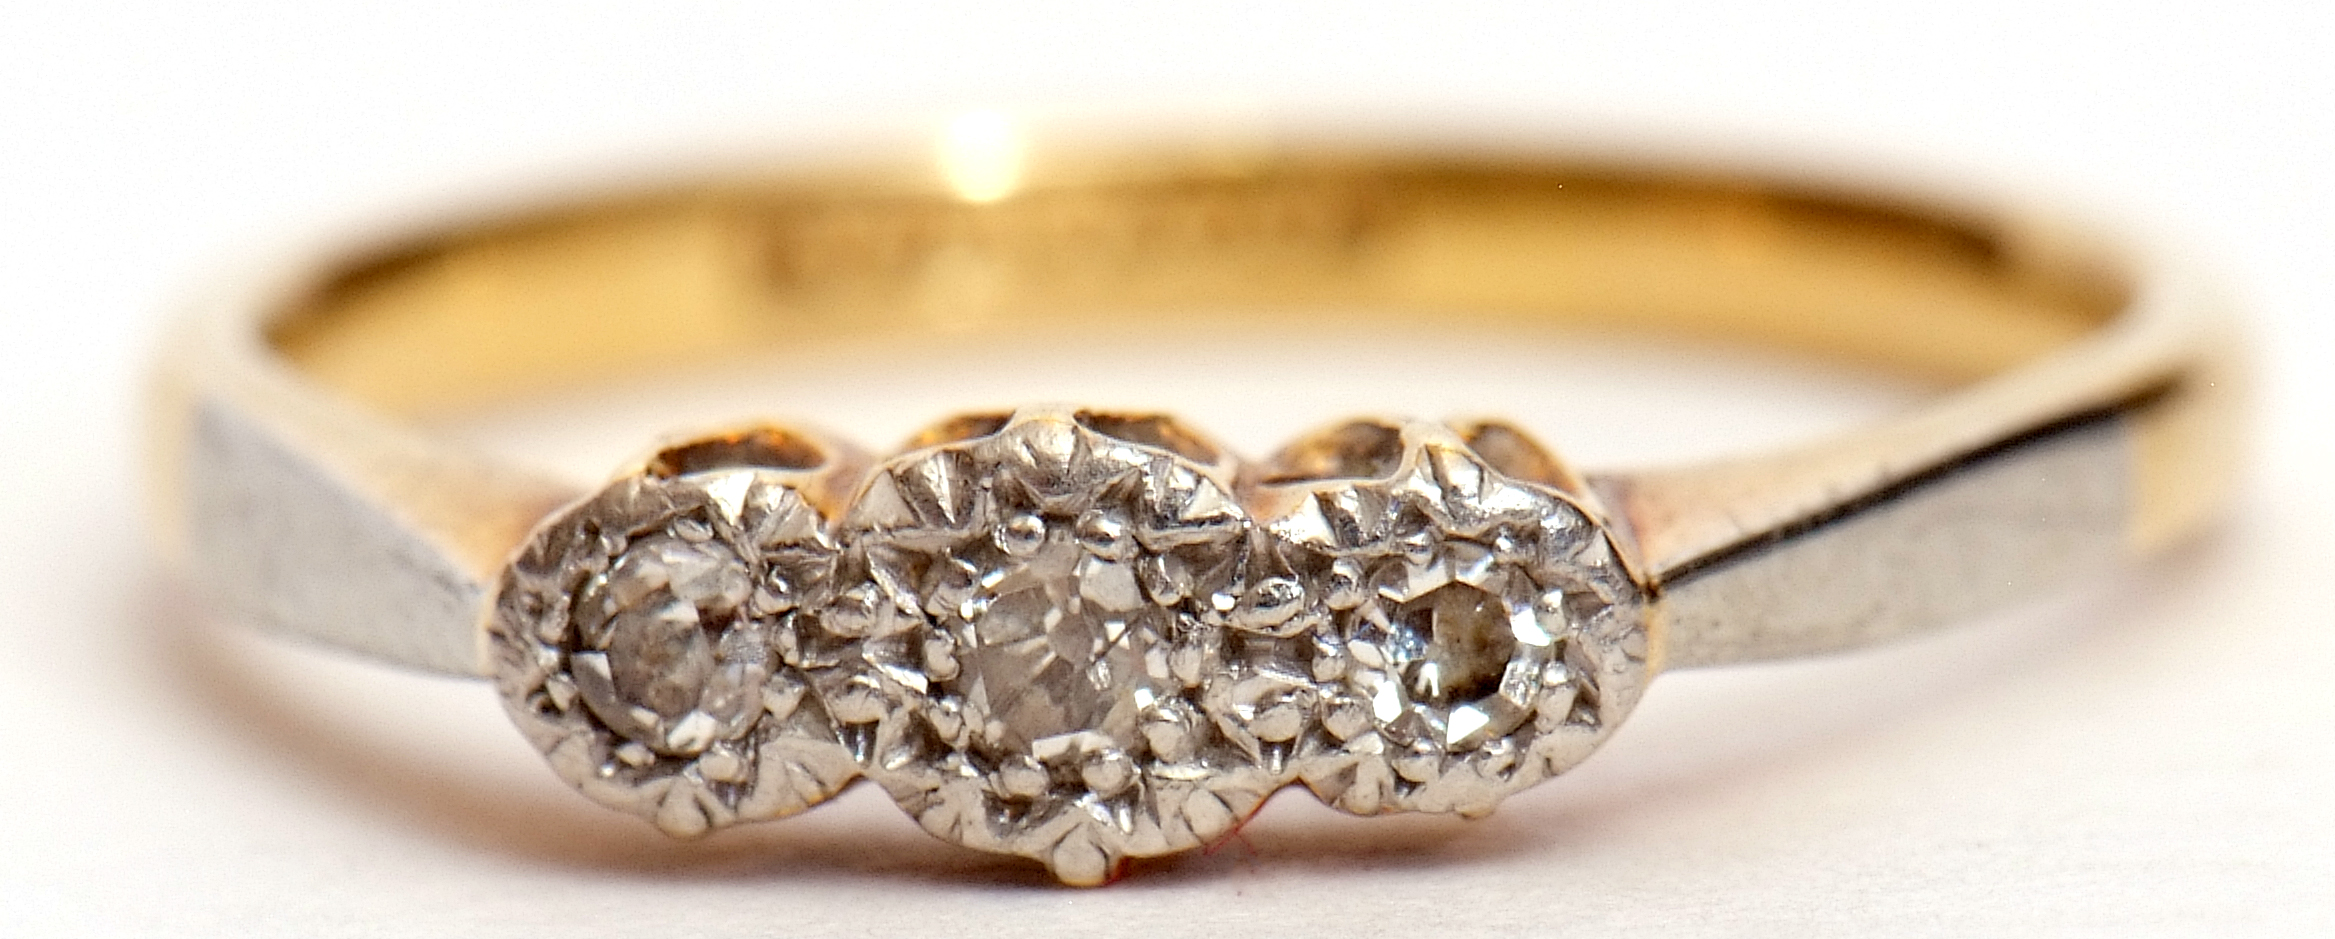 Precious metal three-stone diamond ring featuring 3 small single cut diamonds in a star engraved